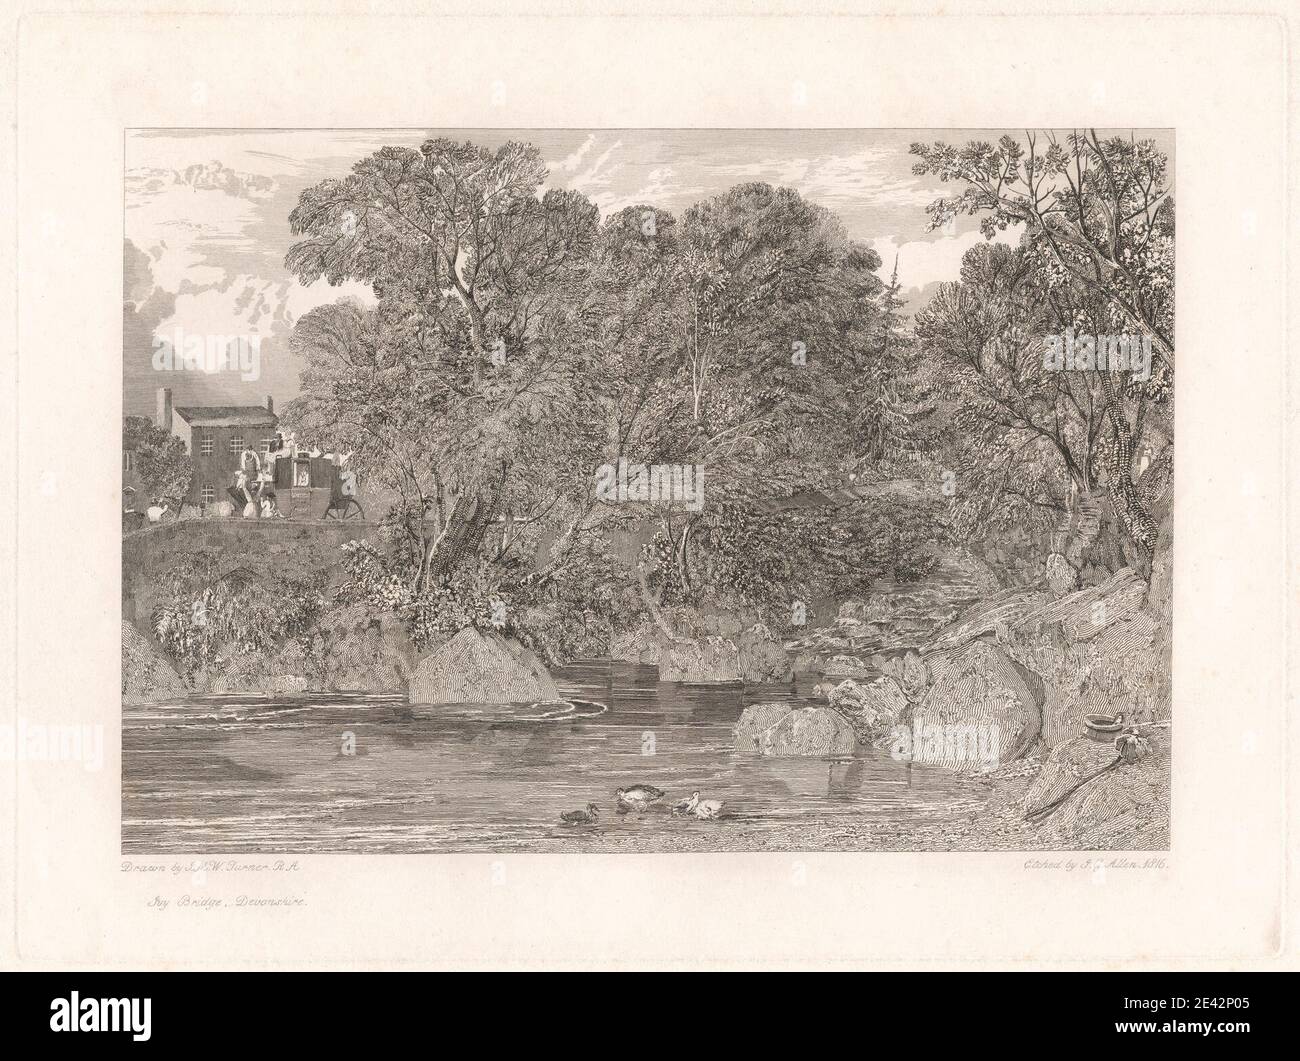 Print made by James C. Allen, active 1821â€“1831, British, Ivy Bridge, Devonshire, 1816. Etching; open etching on medium, slightly textured, cream wove paper. Stock Photo